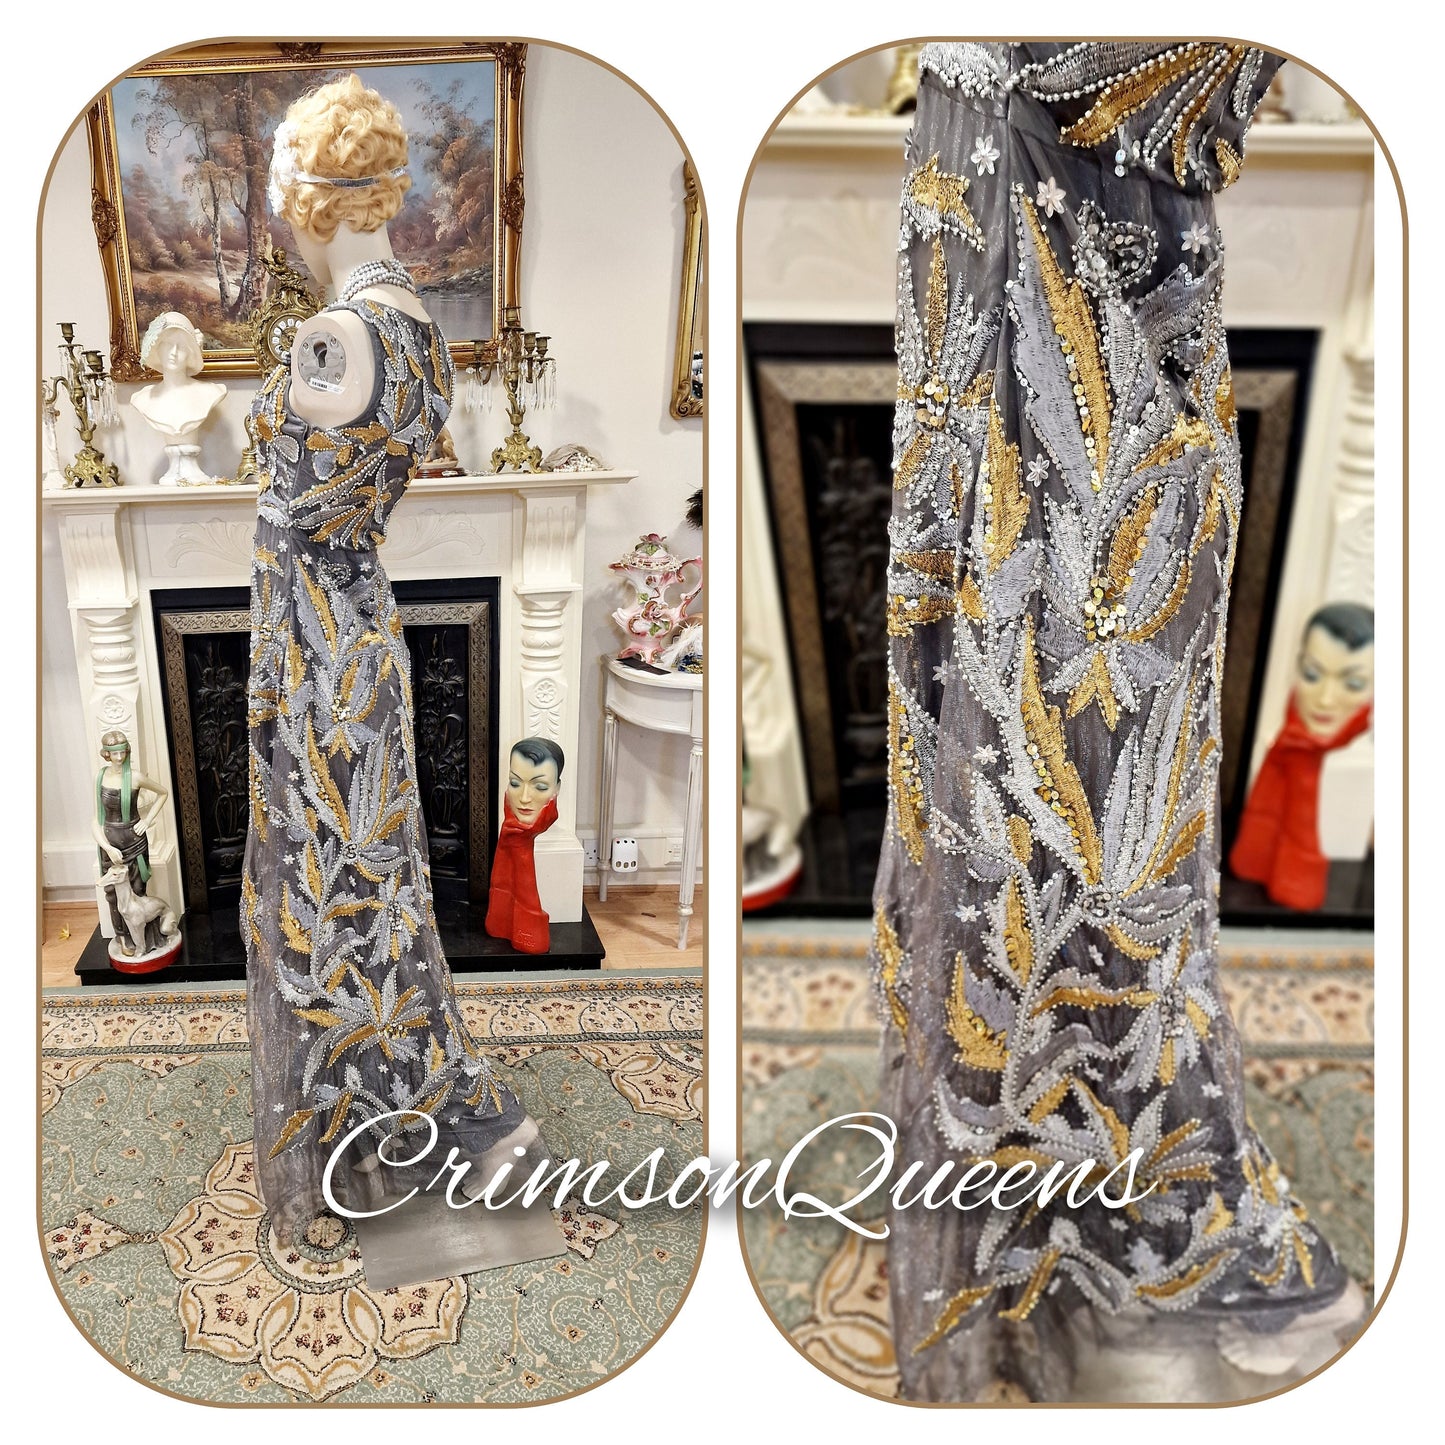 Downton Abbey dress vintage embellished beaded embroidered silver leaf feather statement gold dress  UK 4 6 US 0 2